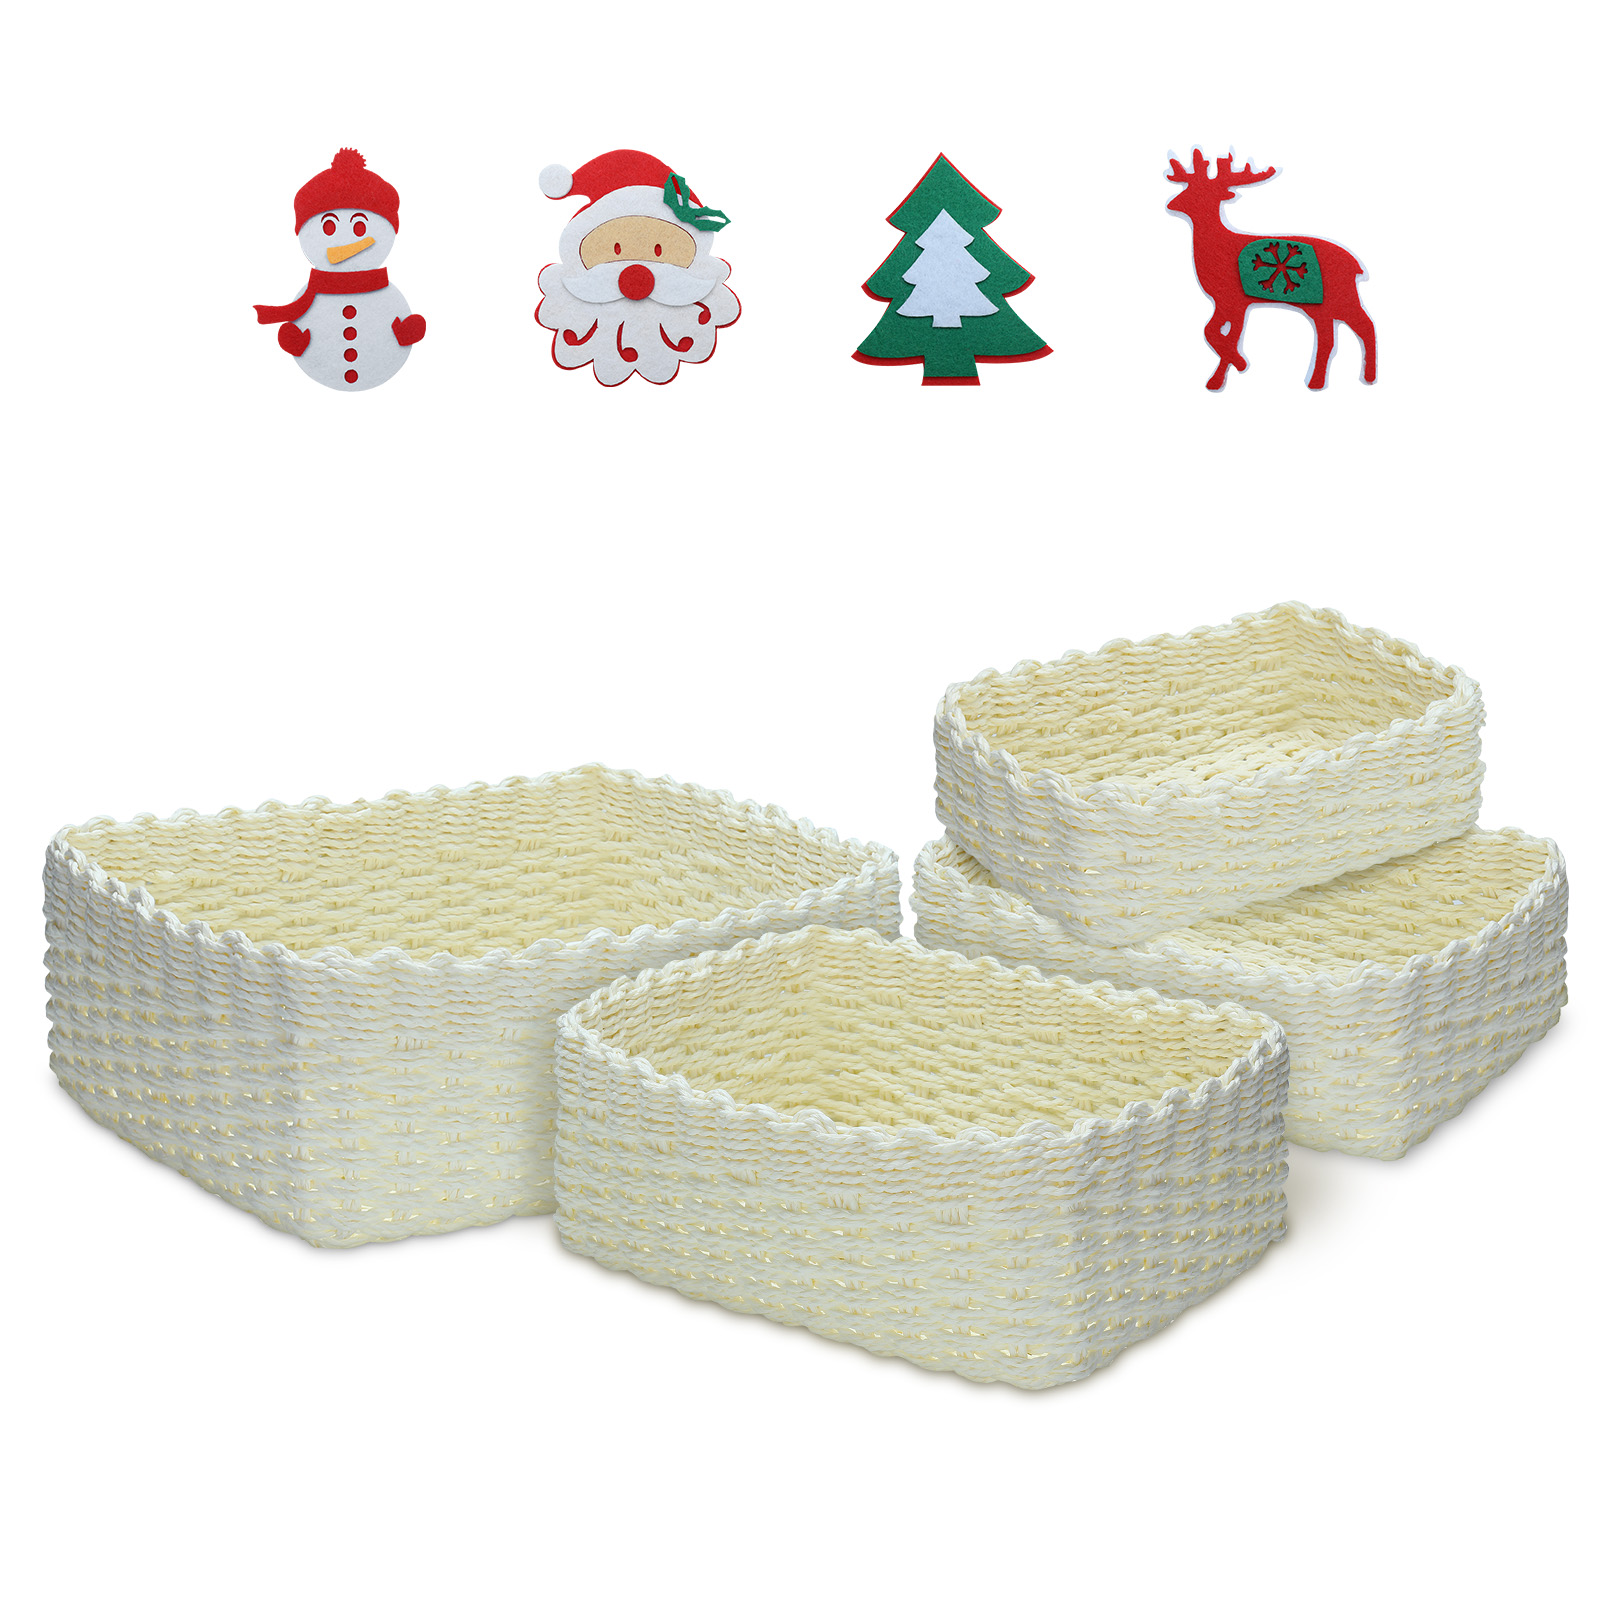 KING-DO-WAY-4PCS-Christmas-Handmade-Woven-Storage-Basket-Set-Durable-Eco-friendly-Storage-Basket-1891489-19